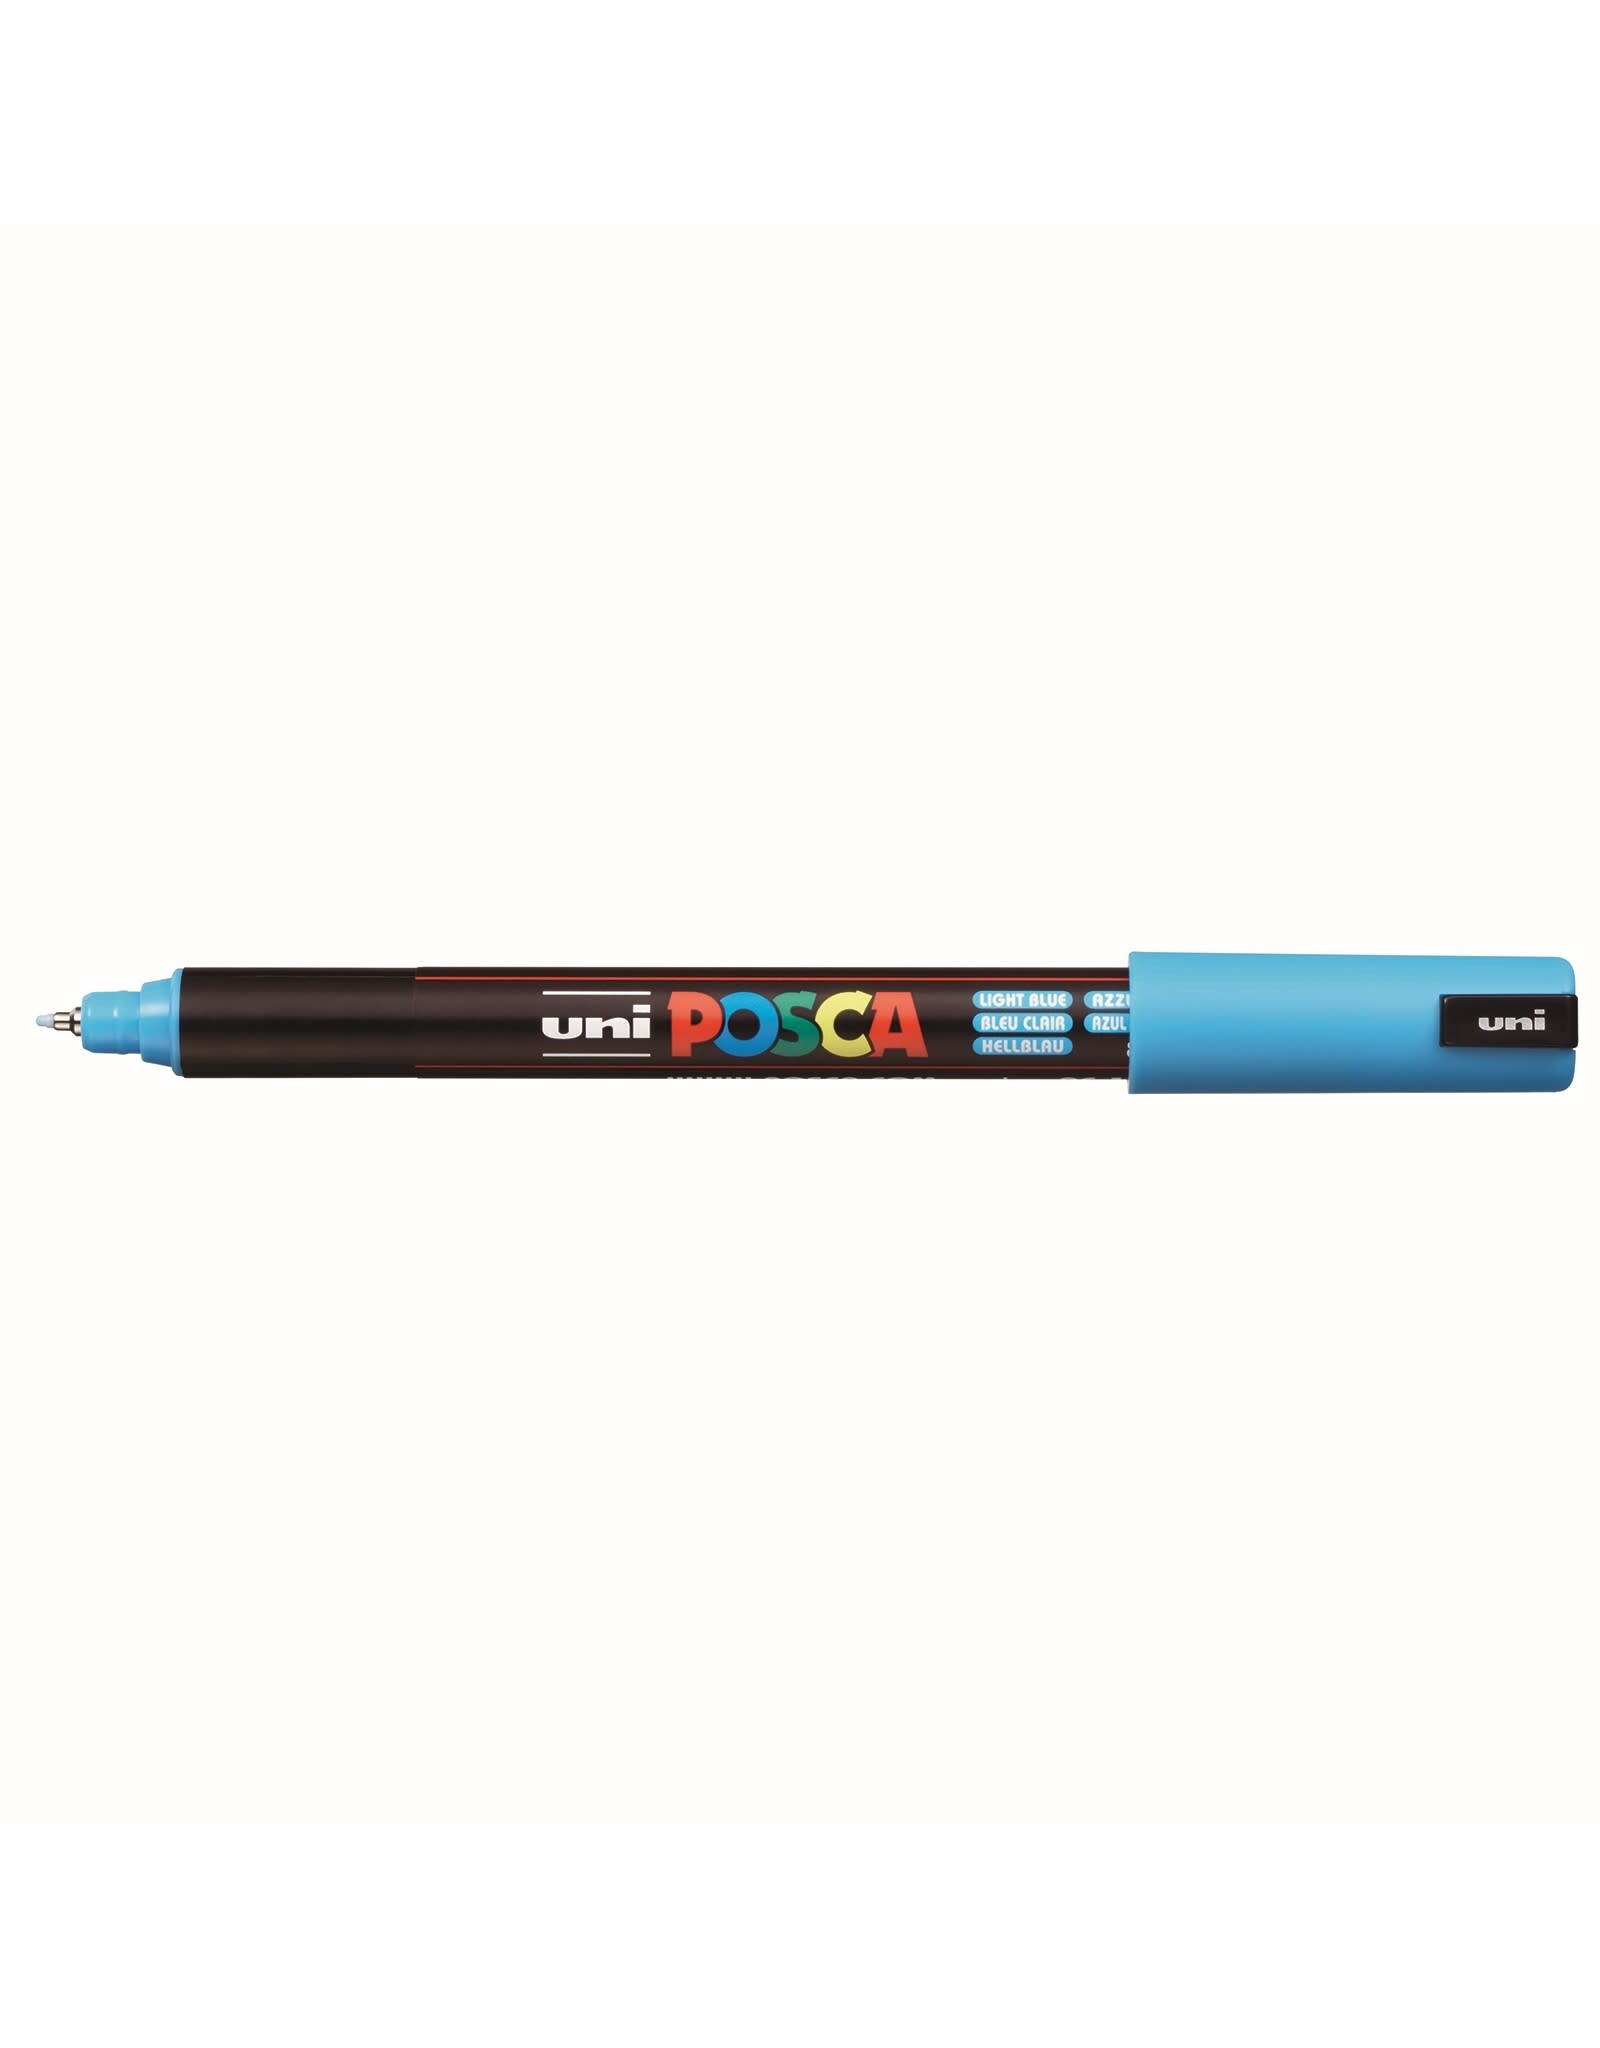 POSCA Uni POSCA Paint Marker, Extra Fine Metal Tip, Light Blue